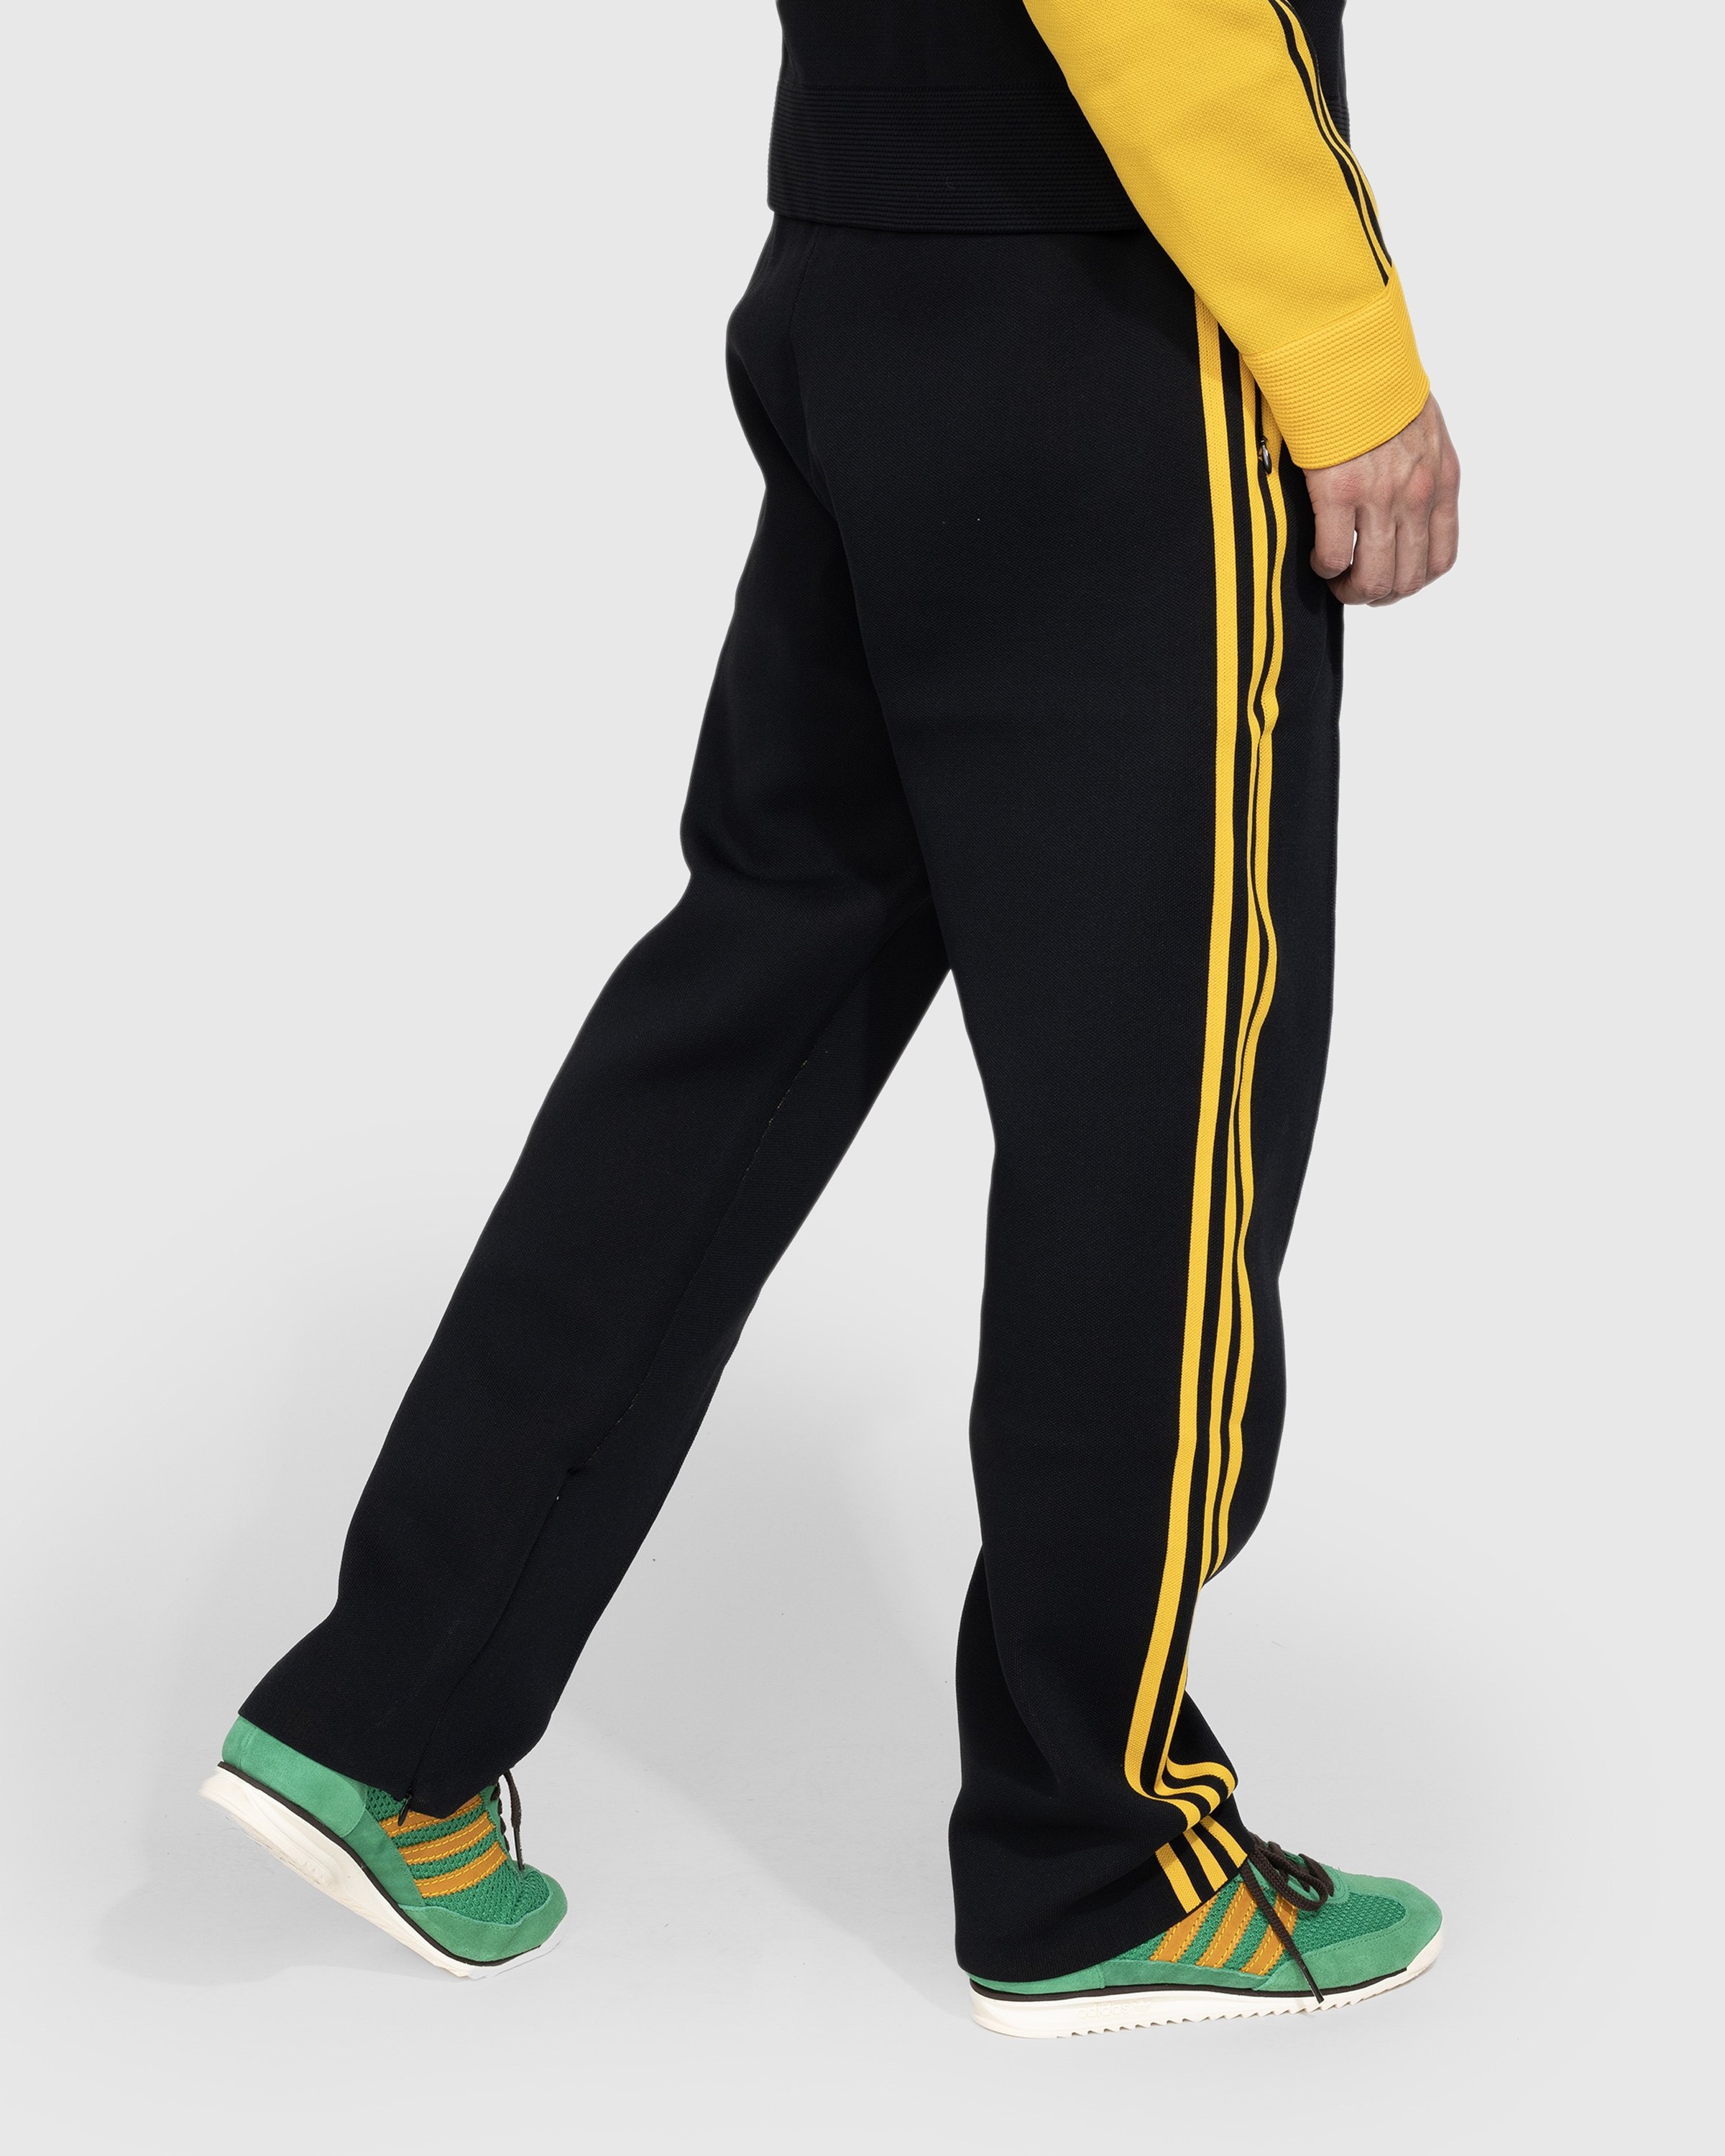 Adidas x Wales Bonner – Knit Track Pant Black - Pants - Black - Image 3